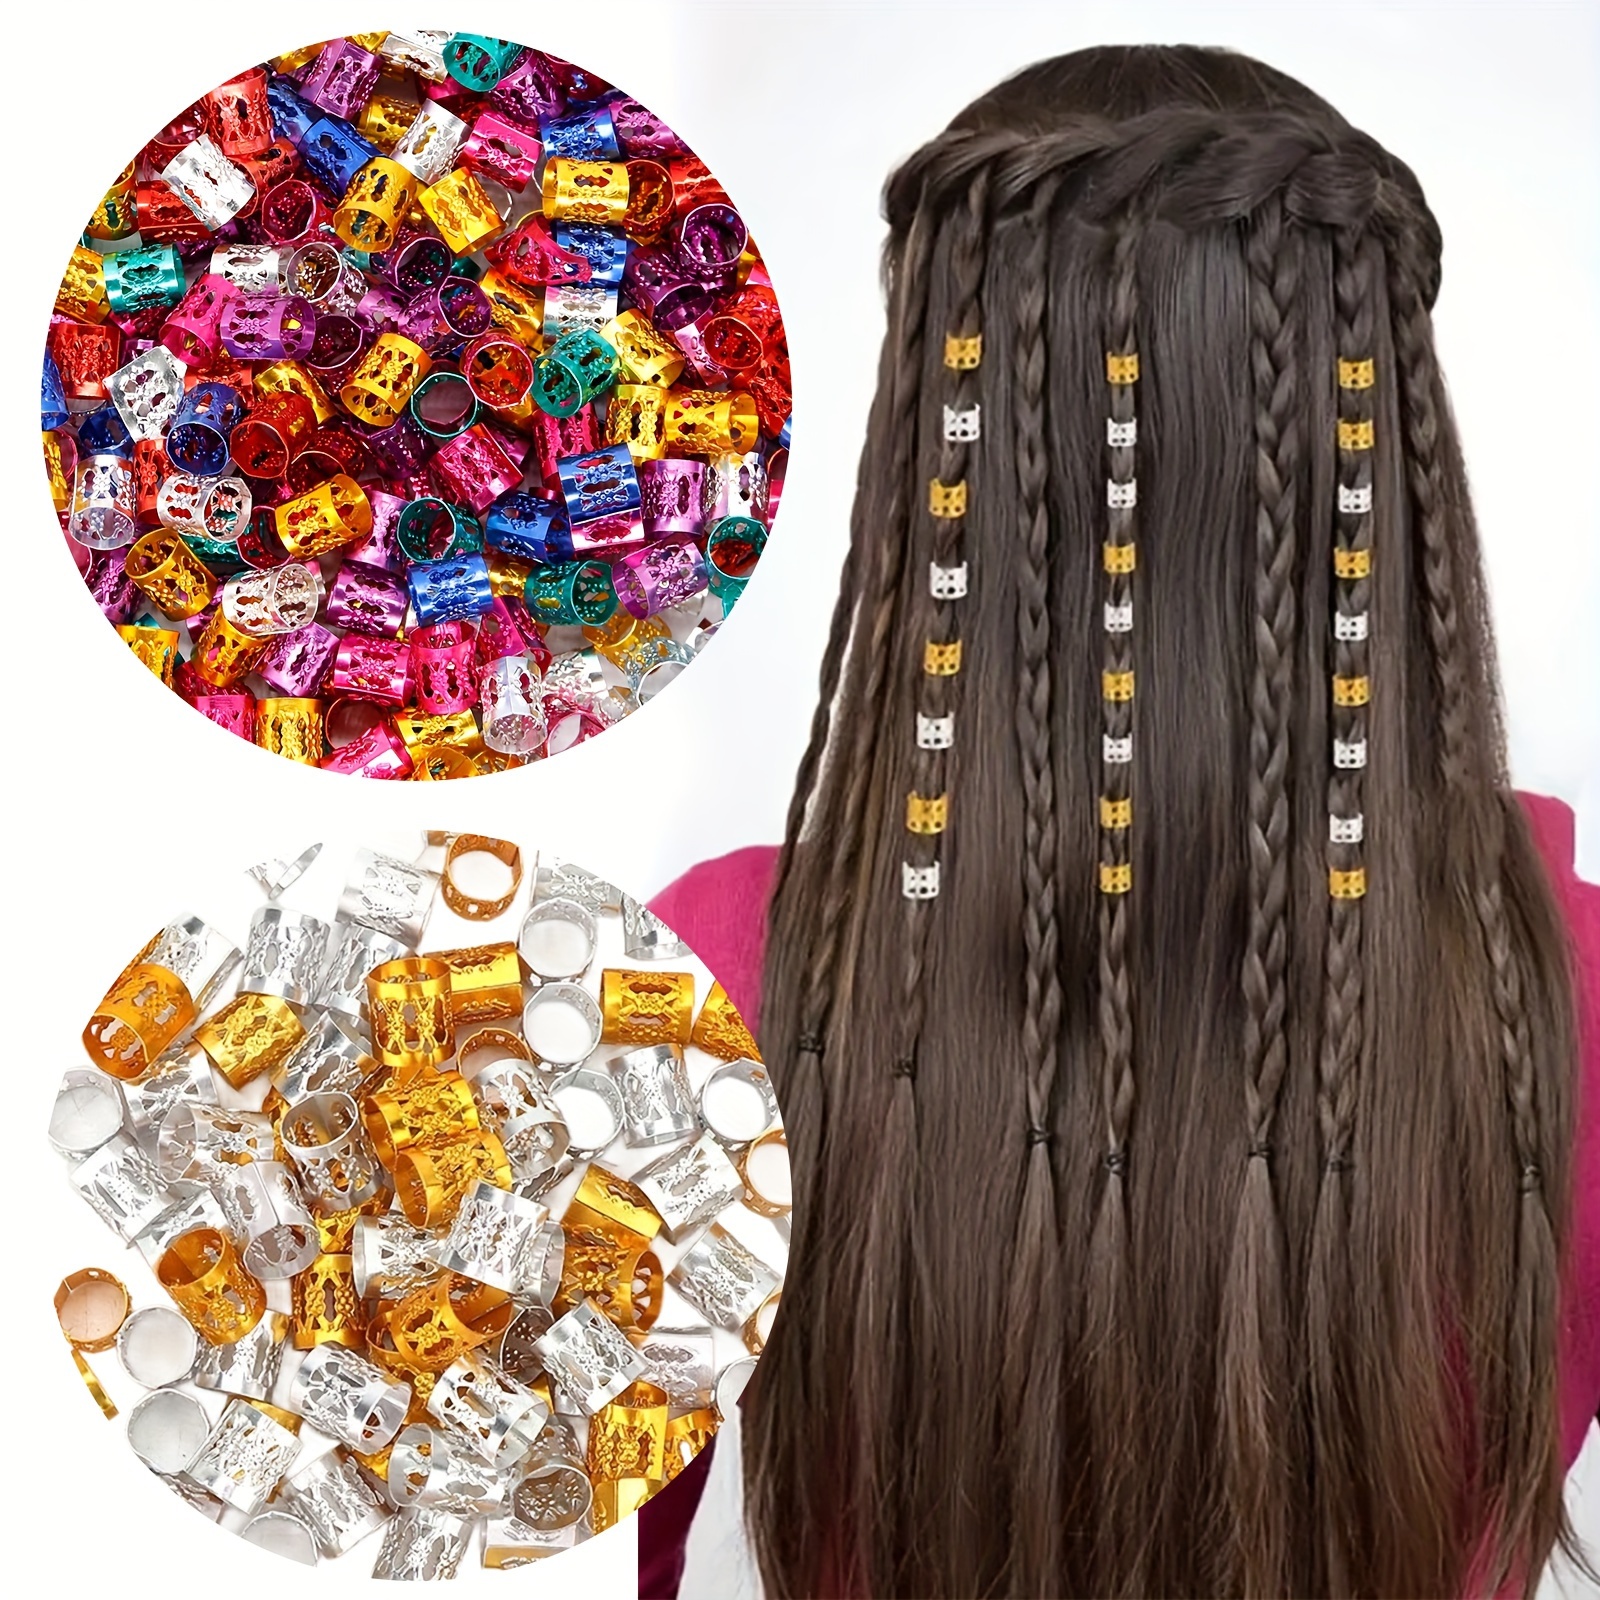 50PCS Dreadlocks Beads Jewelry Hair Braid Rings Clips Dreadlock